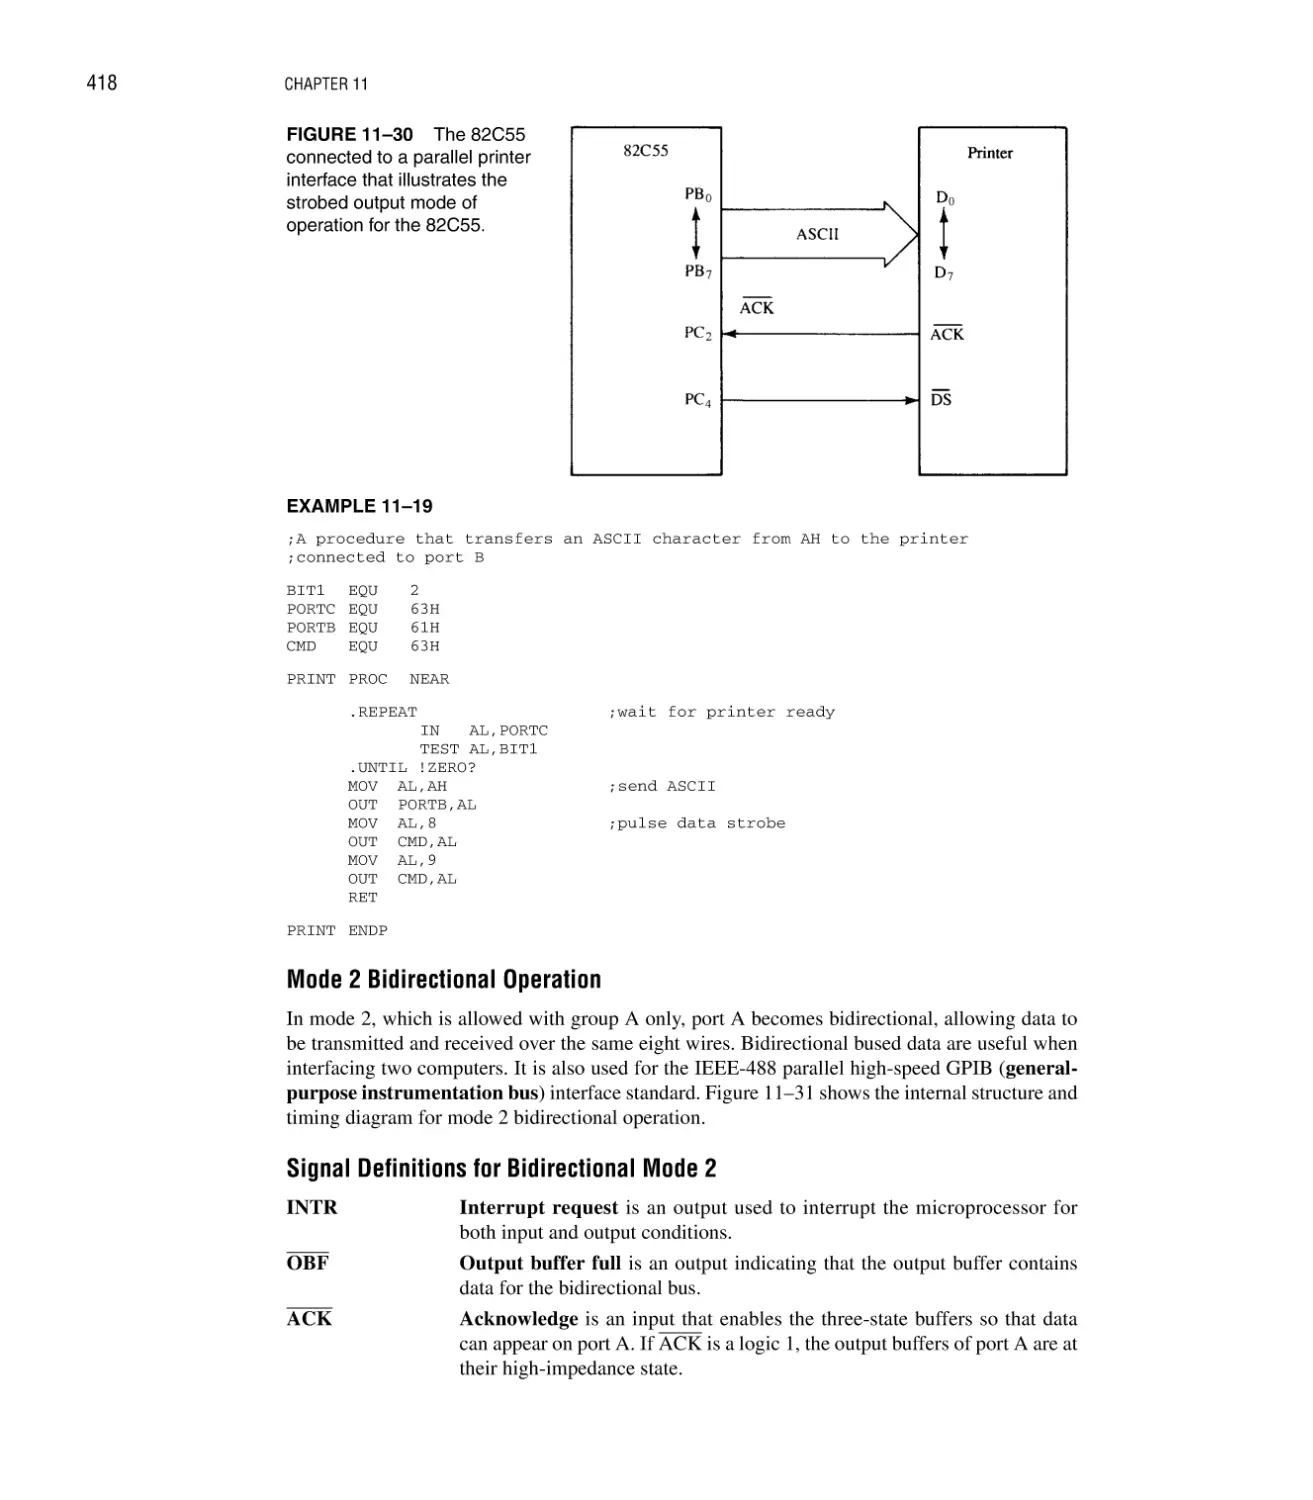 Mode 2 Bidirectional Operation
Signal Definitions for Bidirectional Mode 2